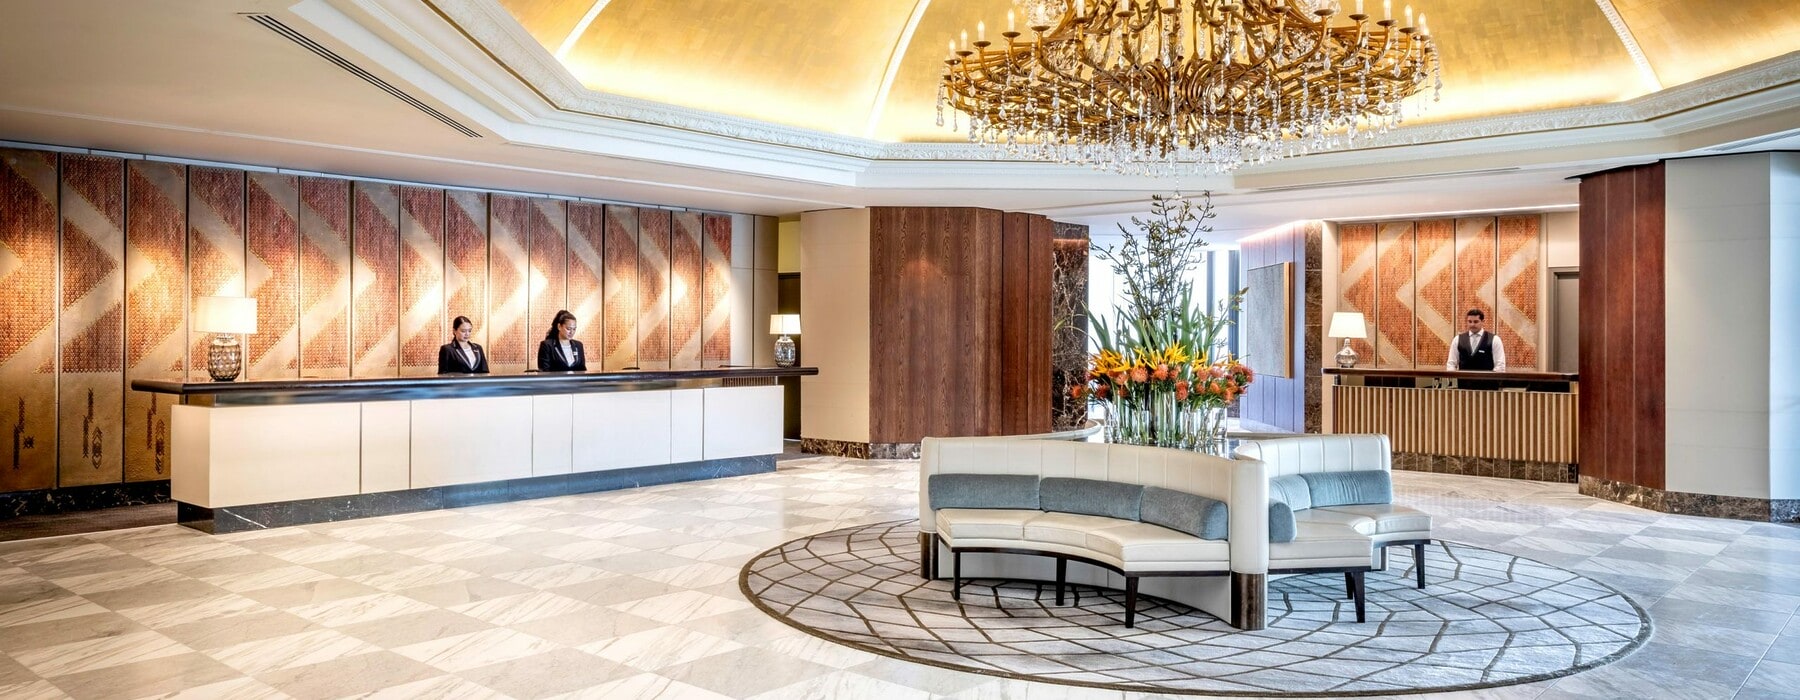 Hav0222_CORDIS_Hotel-Lobby-2-scaled